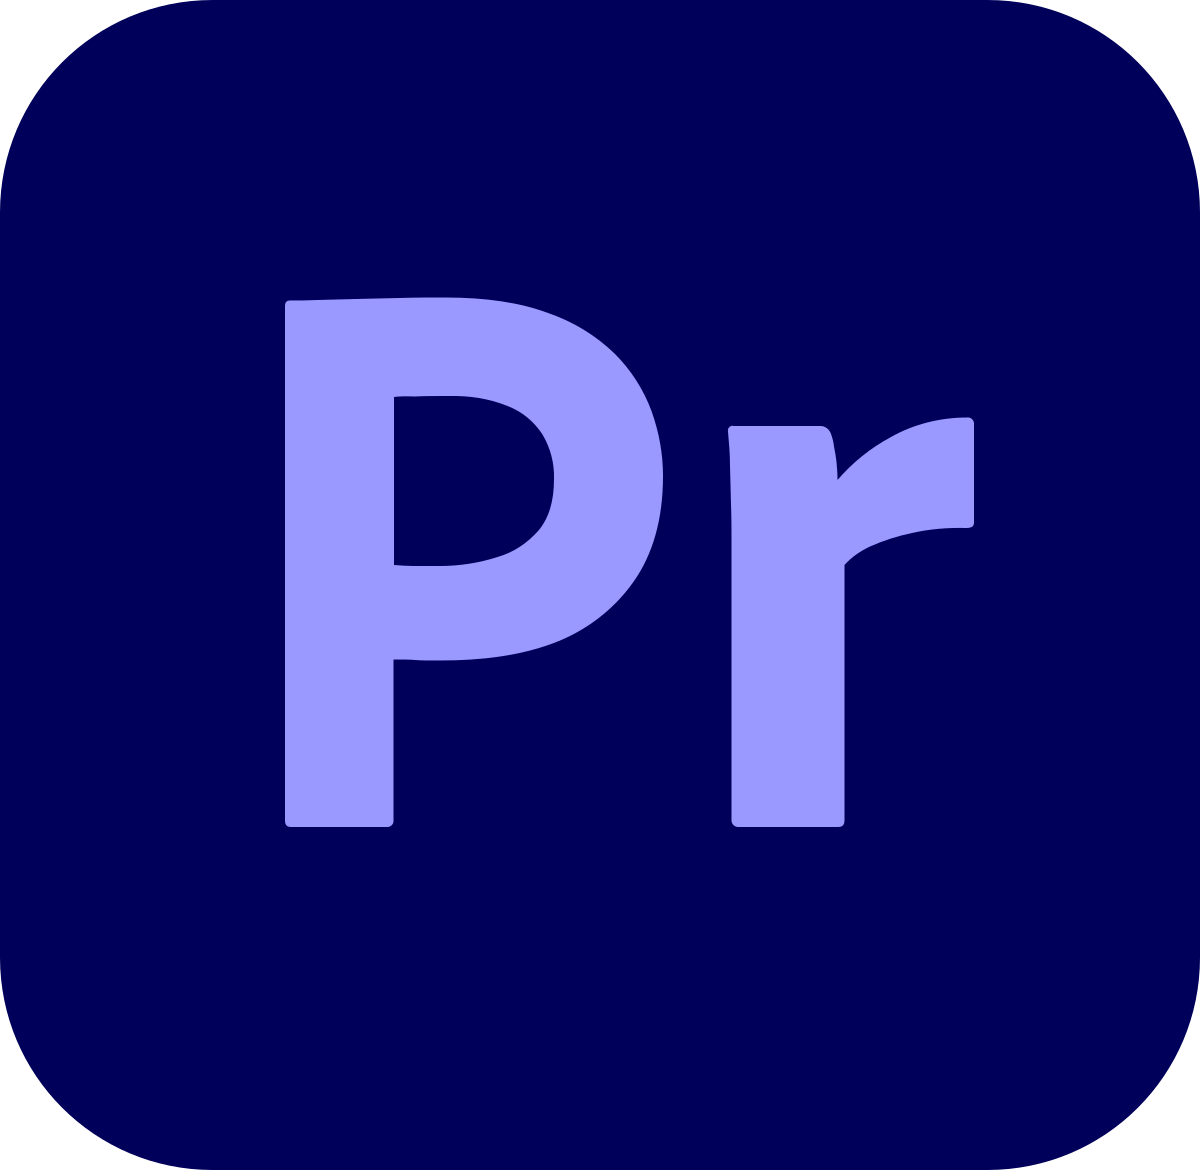 adobe premiere pro apk free download for windows 10